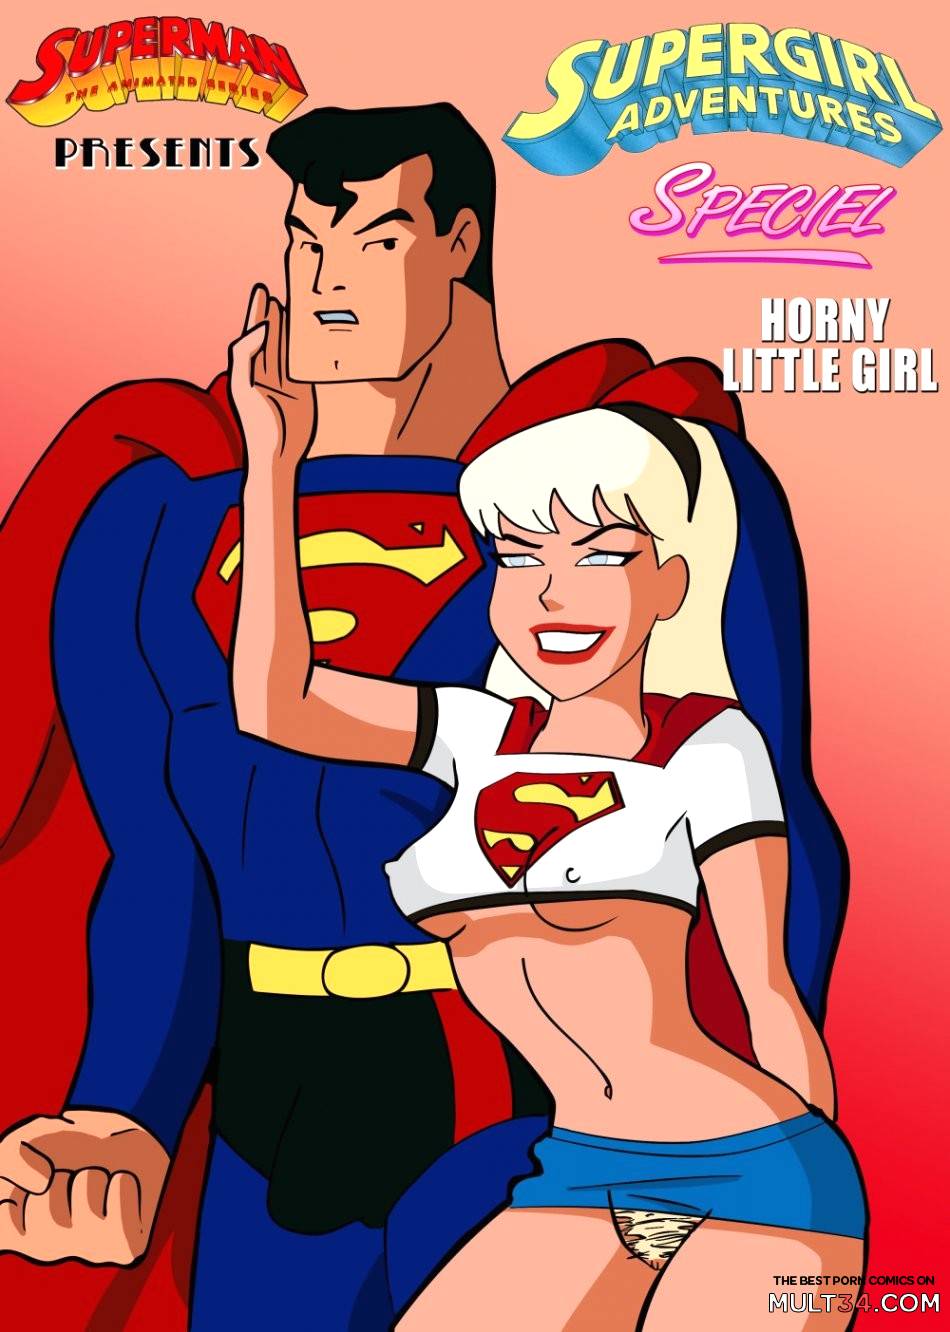 Supergirl Porn - Supergirl Adventures porn comic - the best cartoon porn comics, Rule 34 |  MULT34